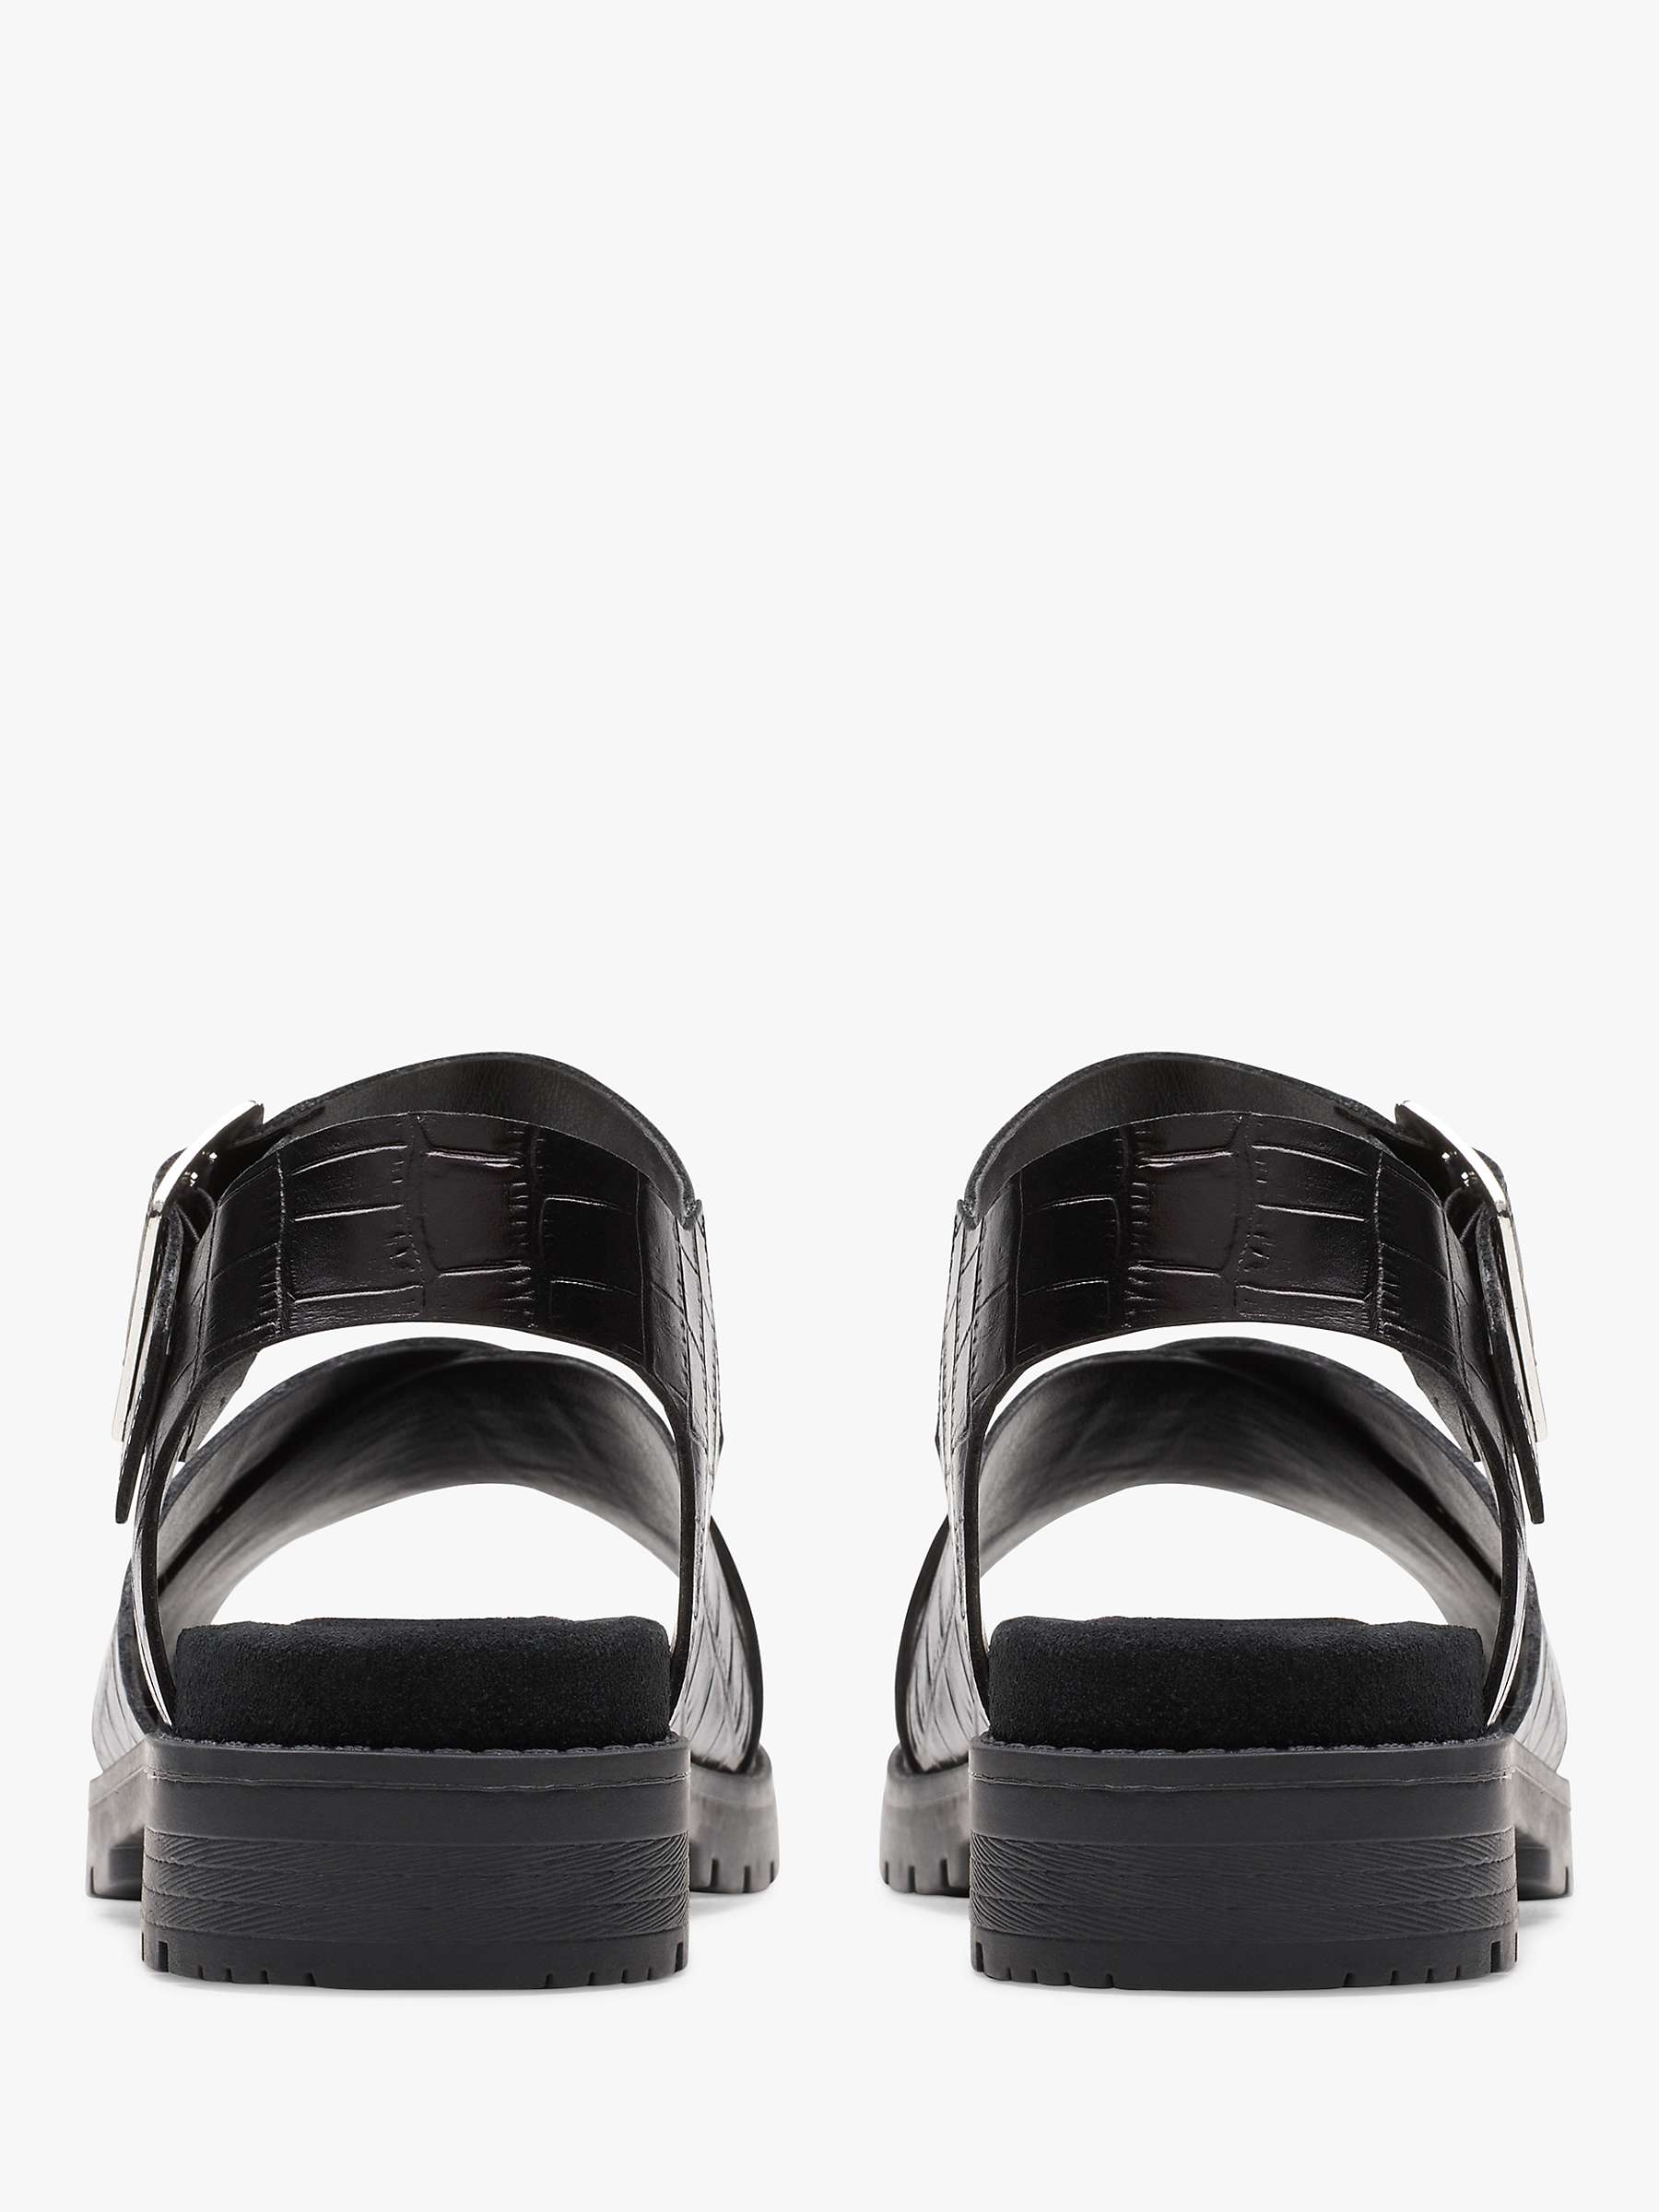 Buy Clarks Orinocco Textured Leather Cross Strap Sandals, Black Online at johnlewis.com